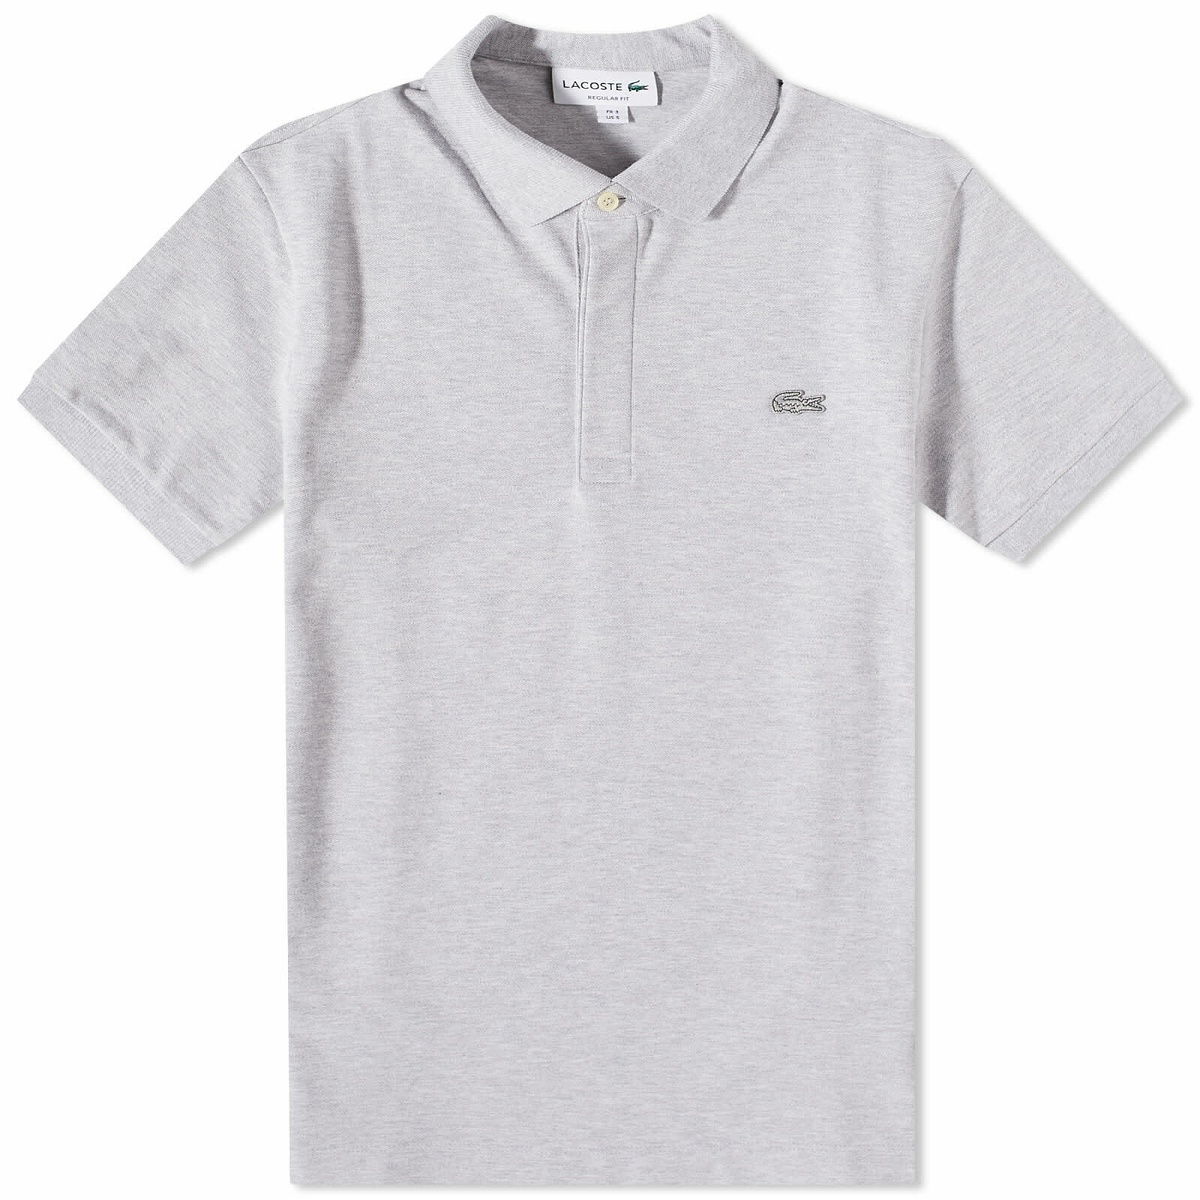 Lacoste Men's Paris Pique Regular Fit Polo Shirt in Silver Chine Lacoste